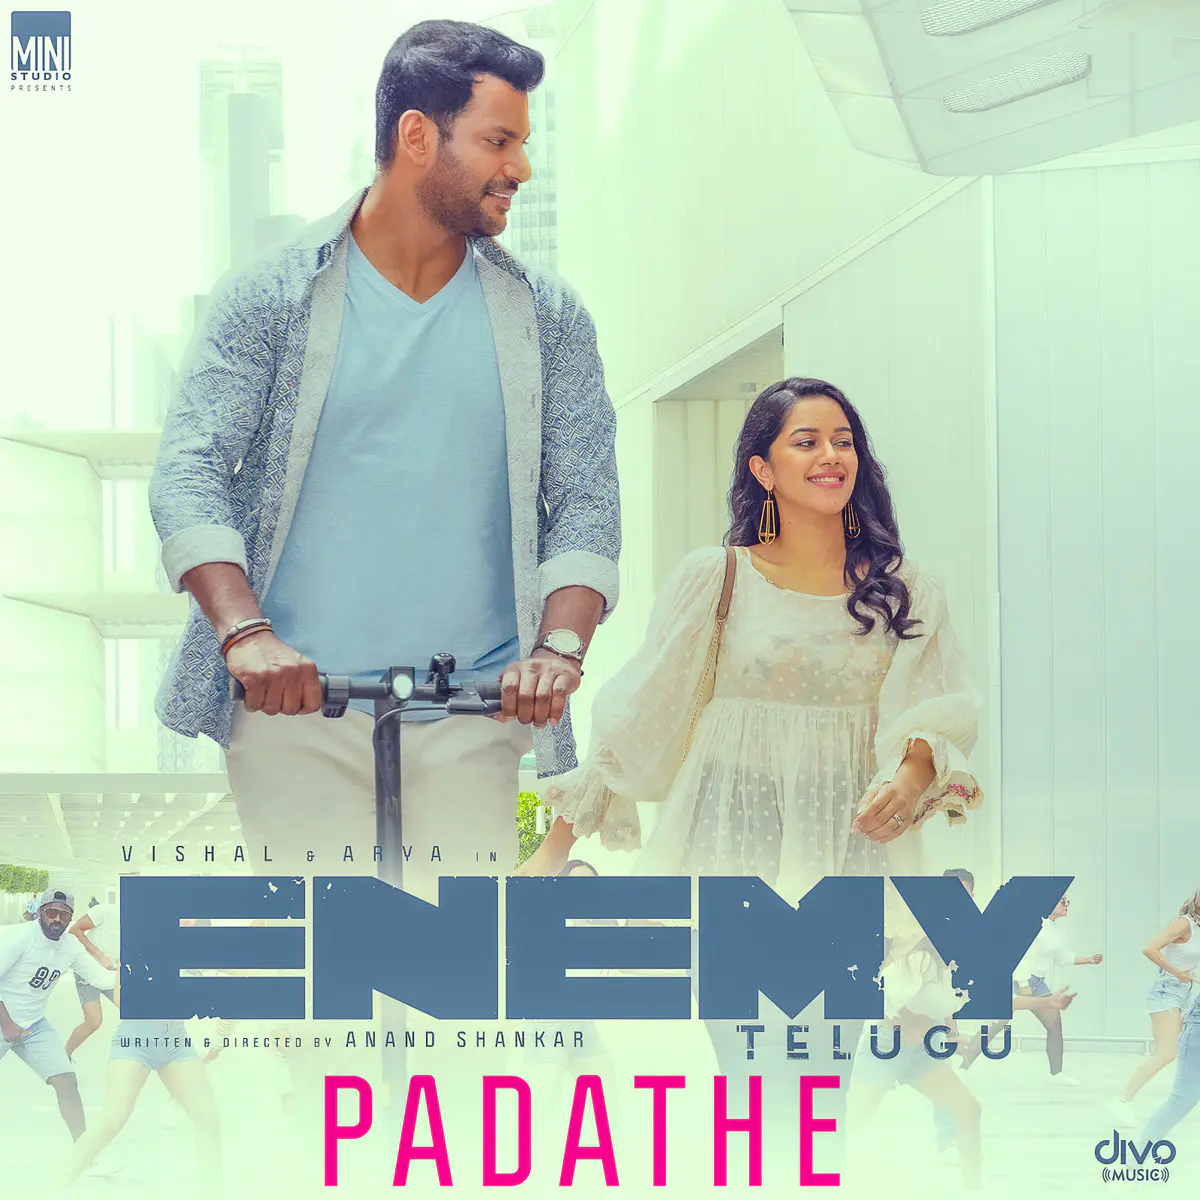 Enemy - Telugu Song Download: Enemy - Telugu MP3 Telugu Song Online Free on  Gaana.com